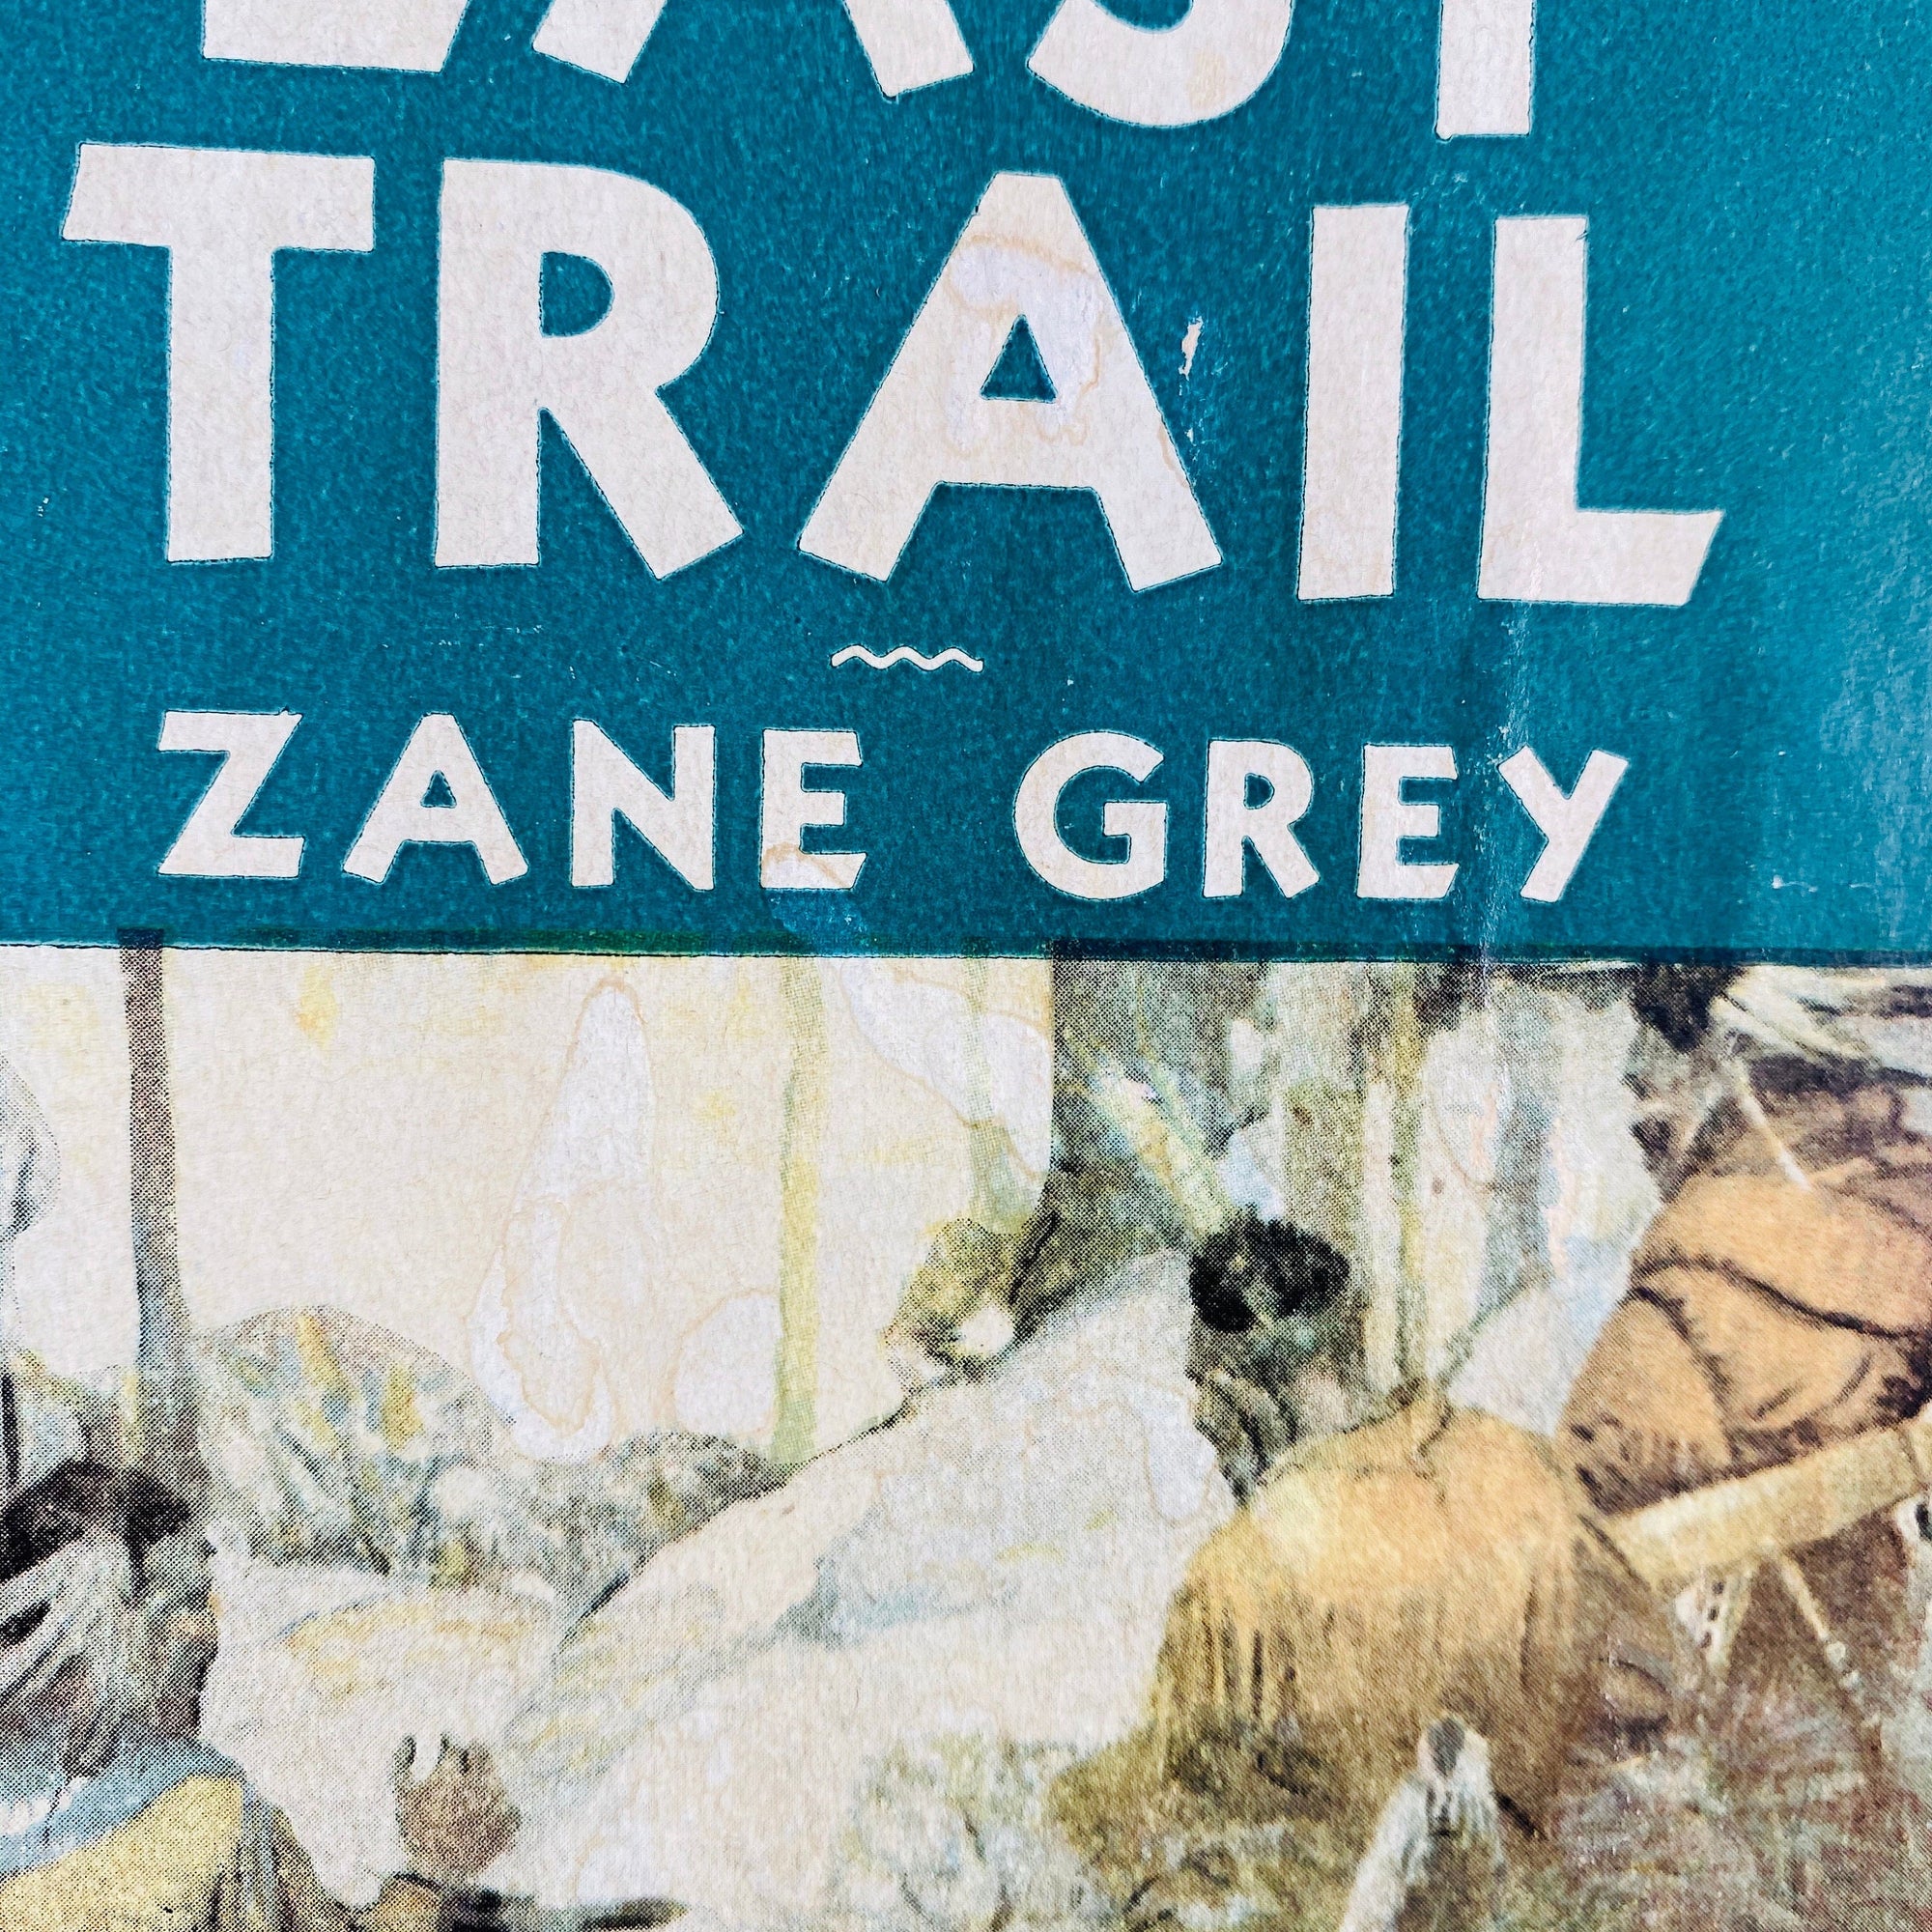 The Last Trail by Zane Grey 1909 w/ Original Dust Jacket First Edition Vintage Book